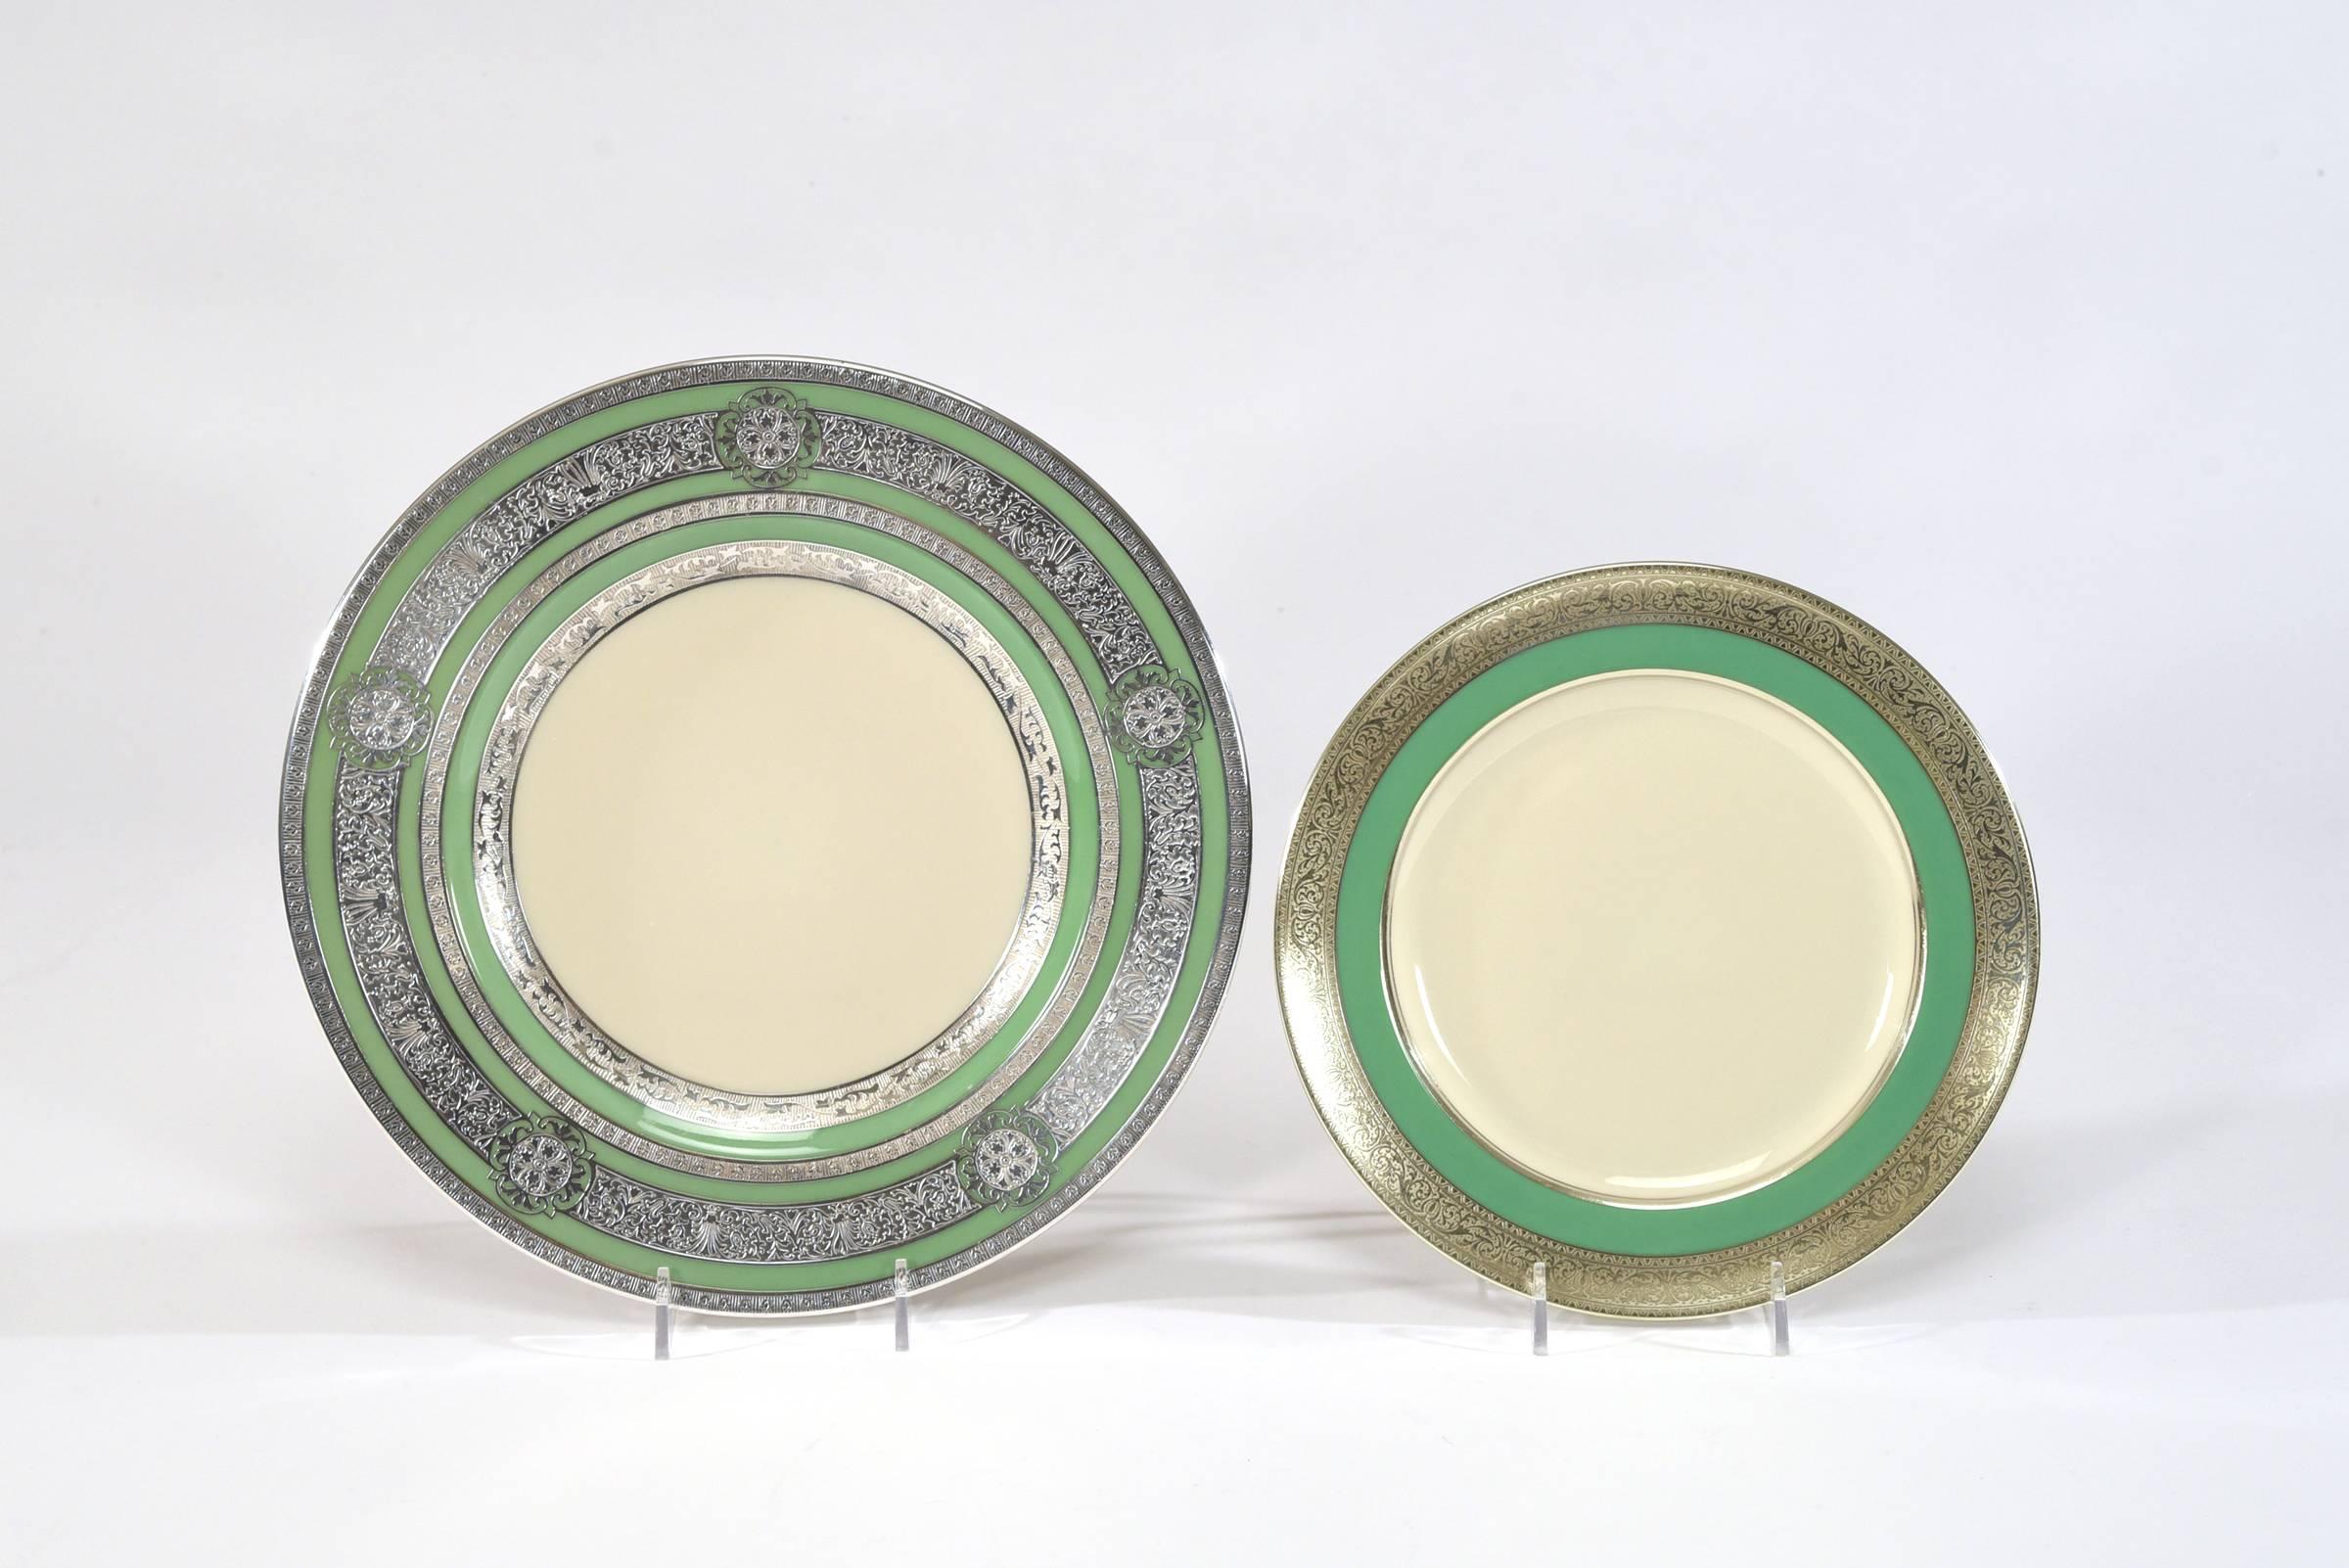 1920s plates